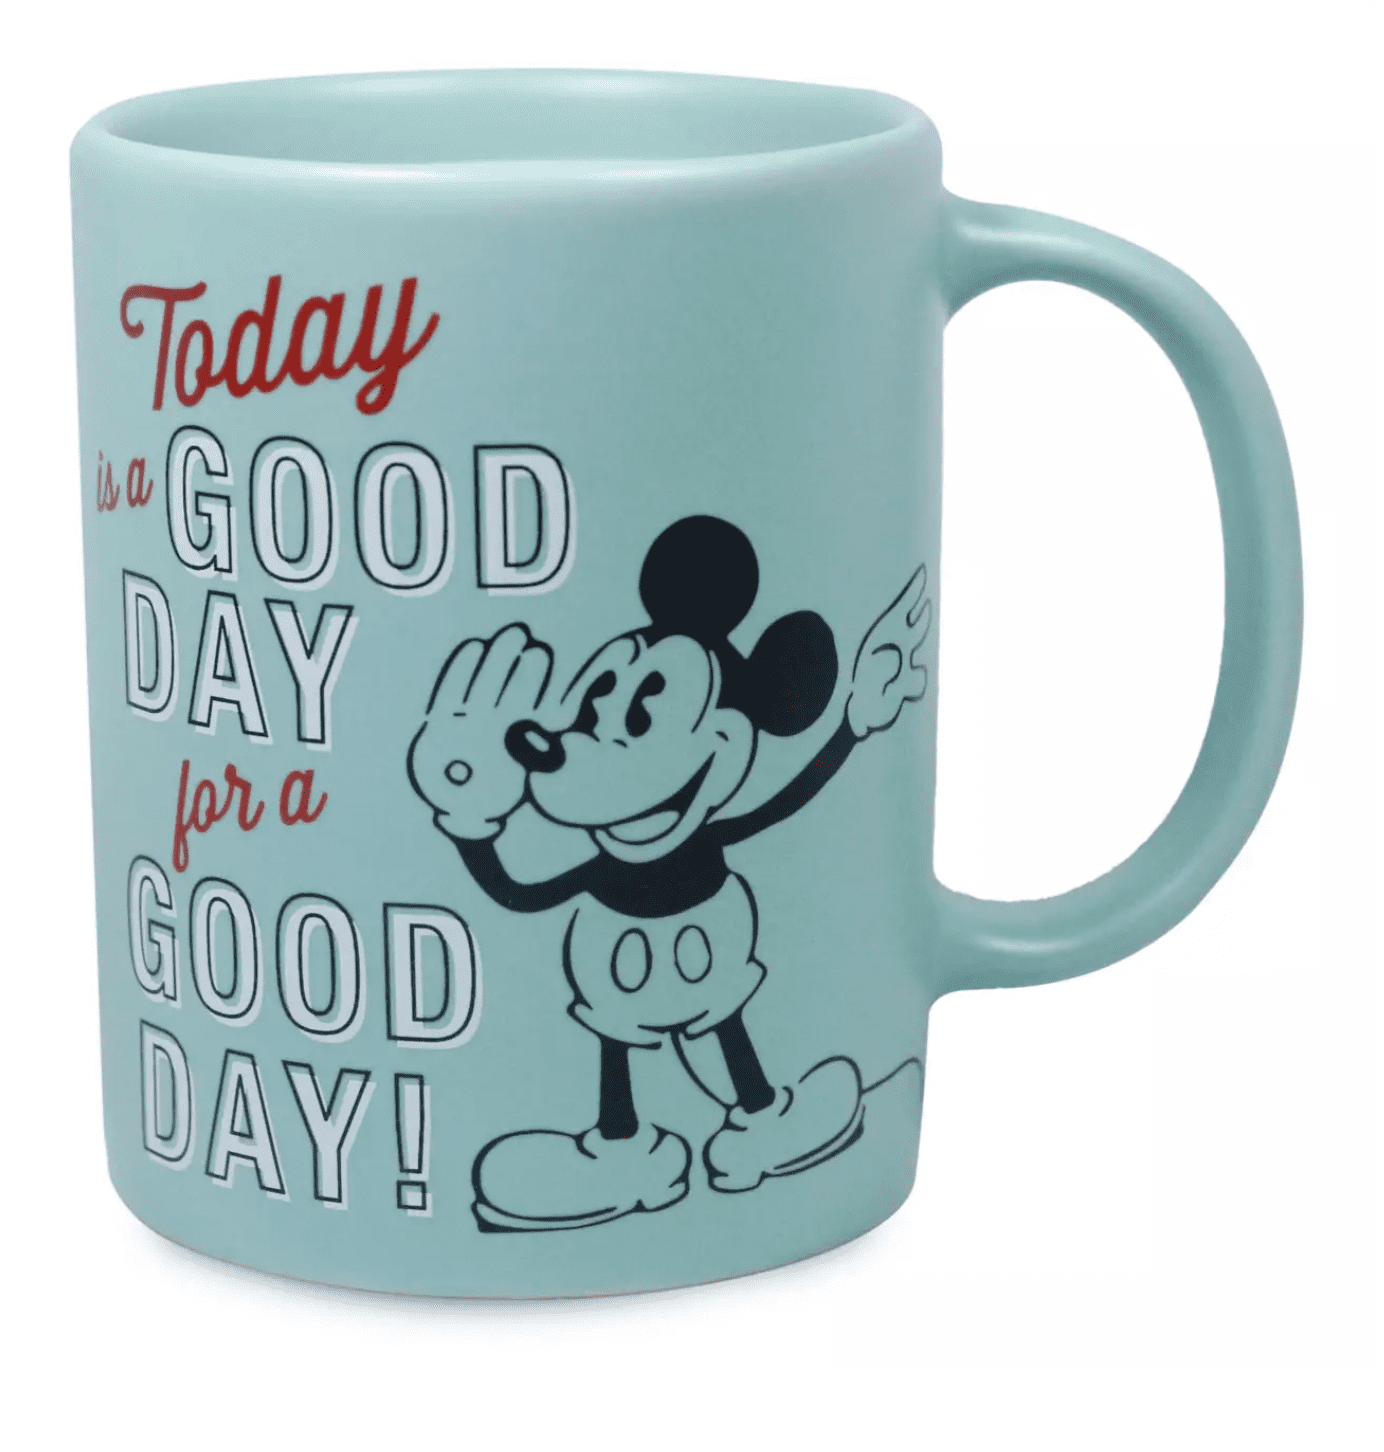 New Mickey Mouse Mug Perfect for Mondays 